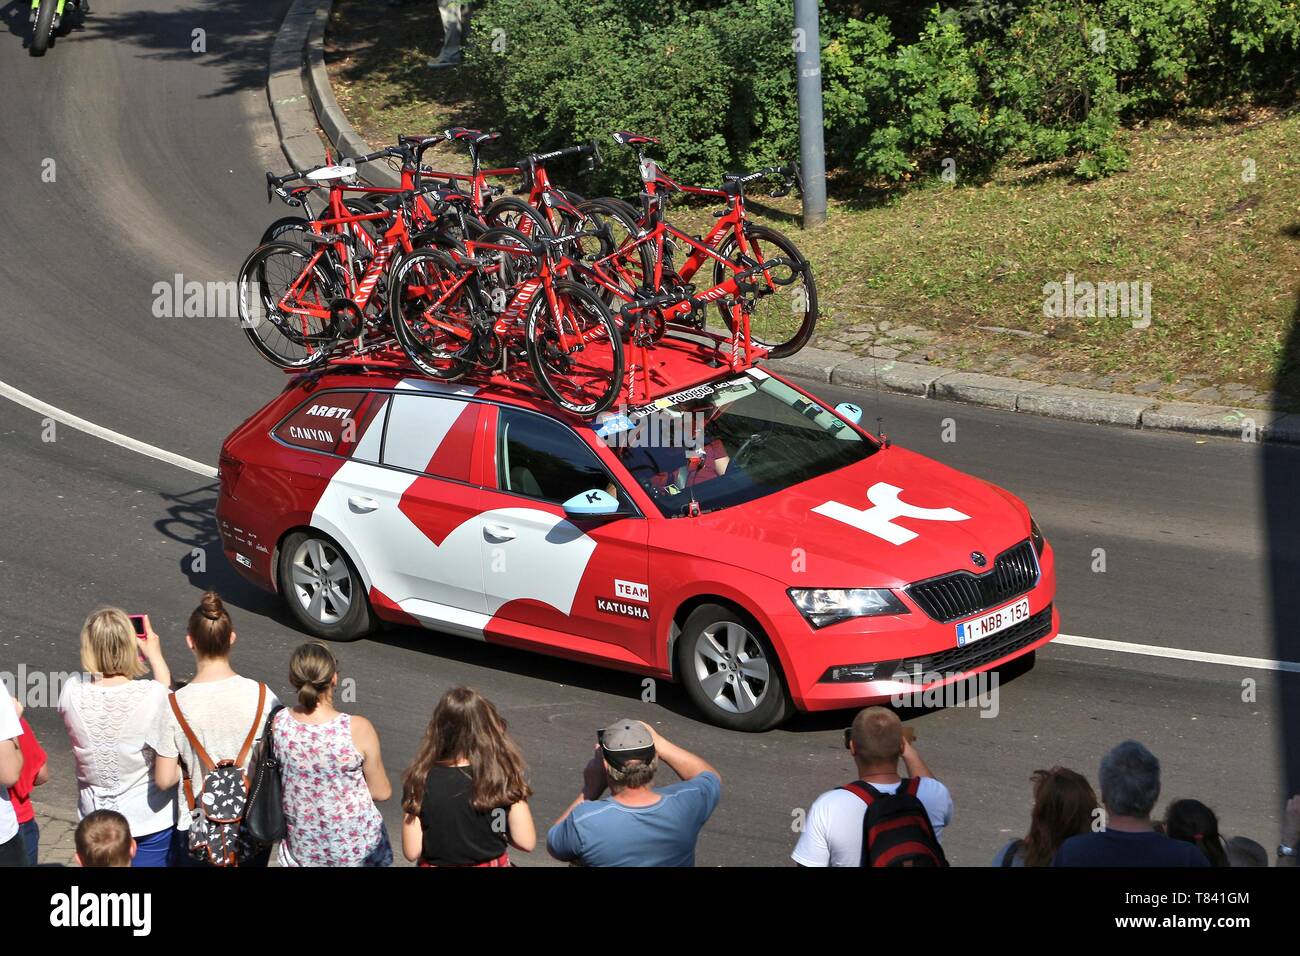 BYTOM AFFITTO, Polonia - 13 luglio 2016: Team veicolo trascina in Tour de Pologne gara ciclistica in Polonia. Skoda Superb del Team Katusha. Foto Stock